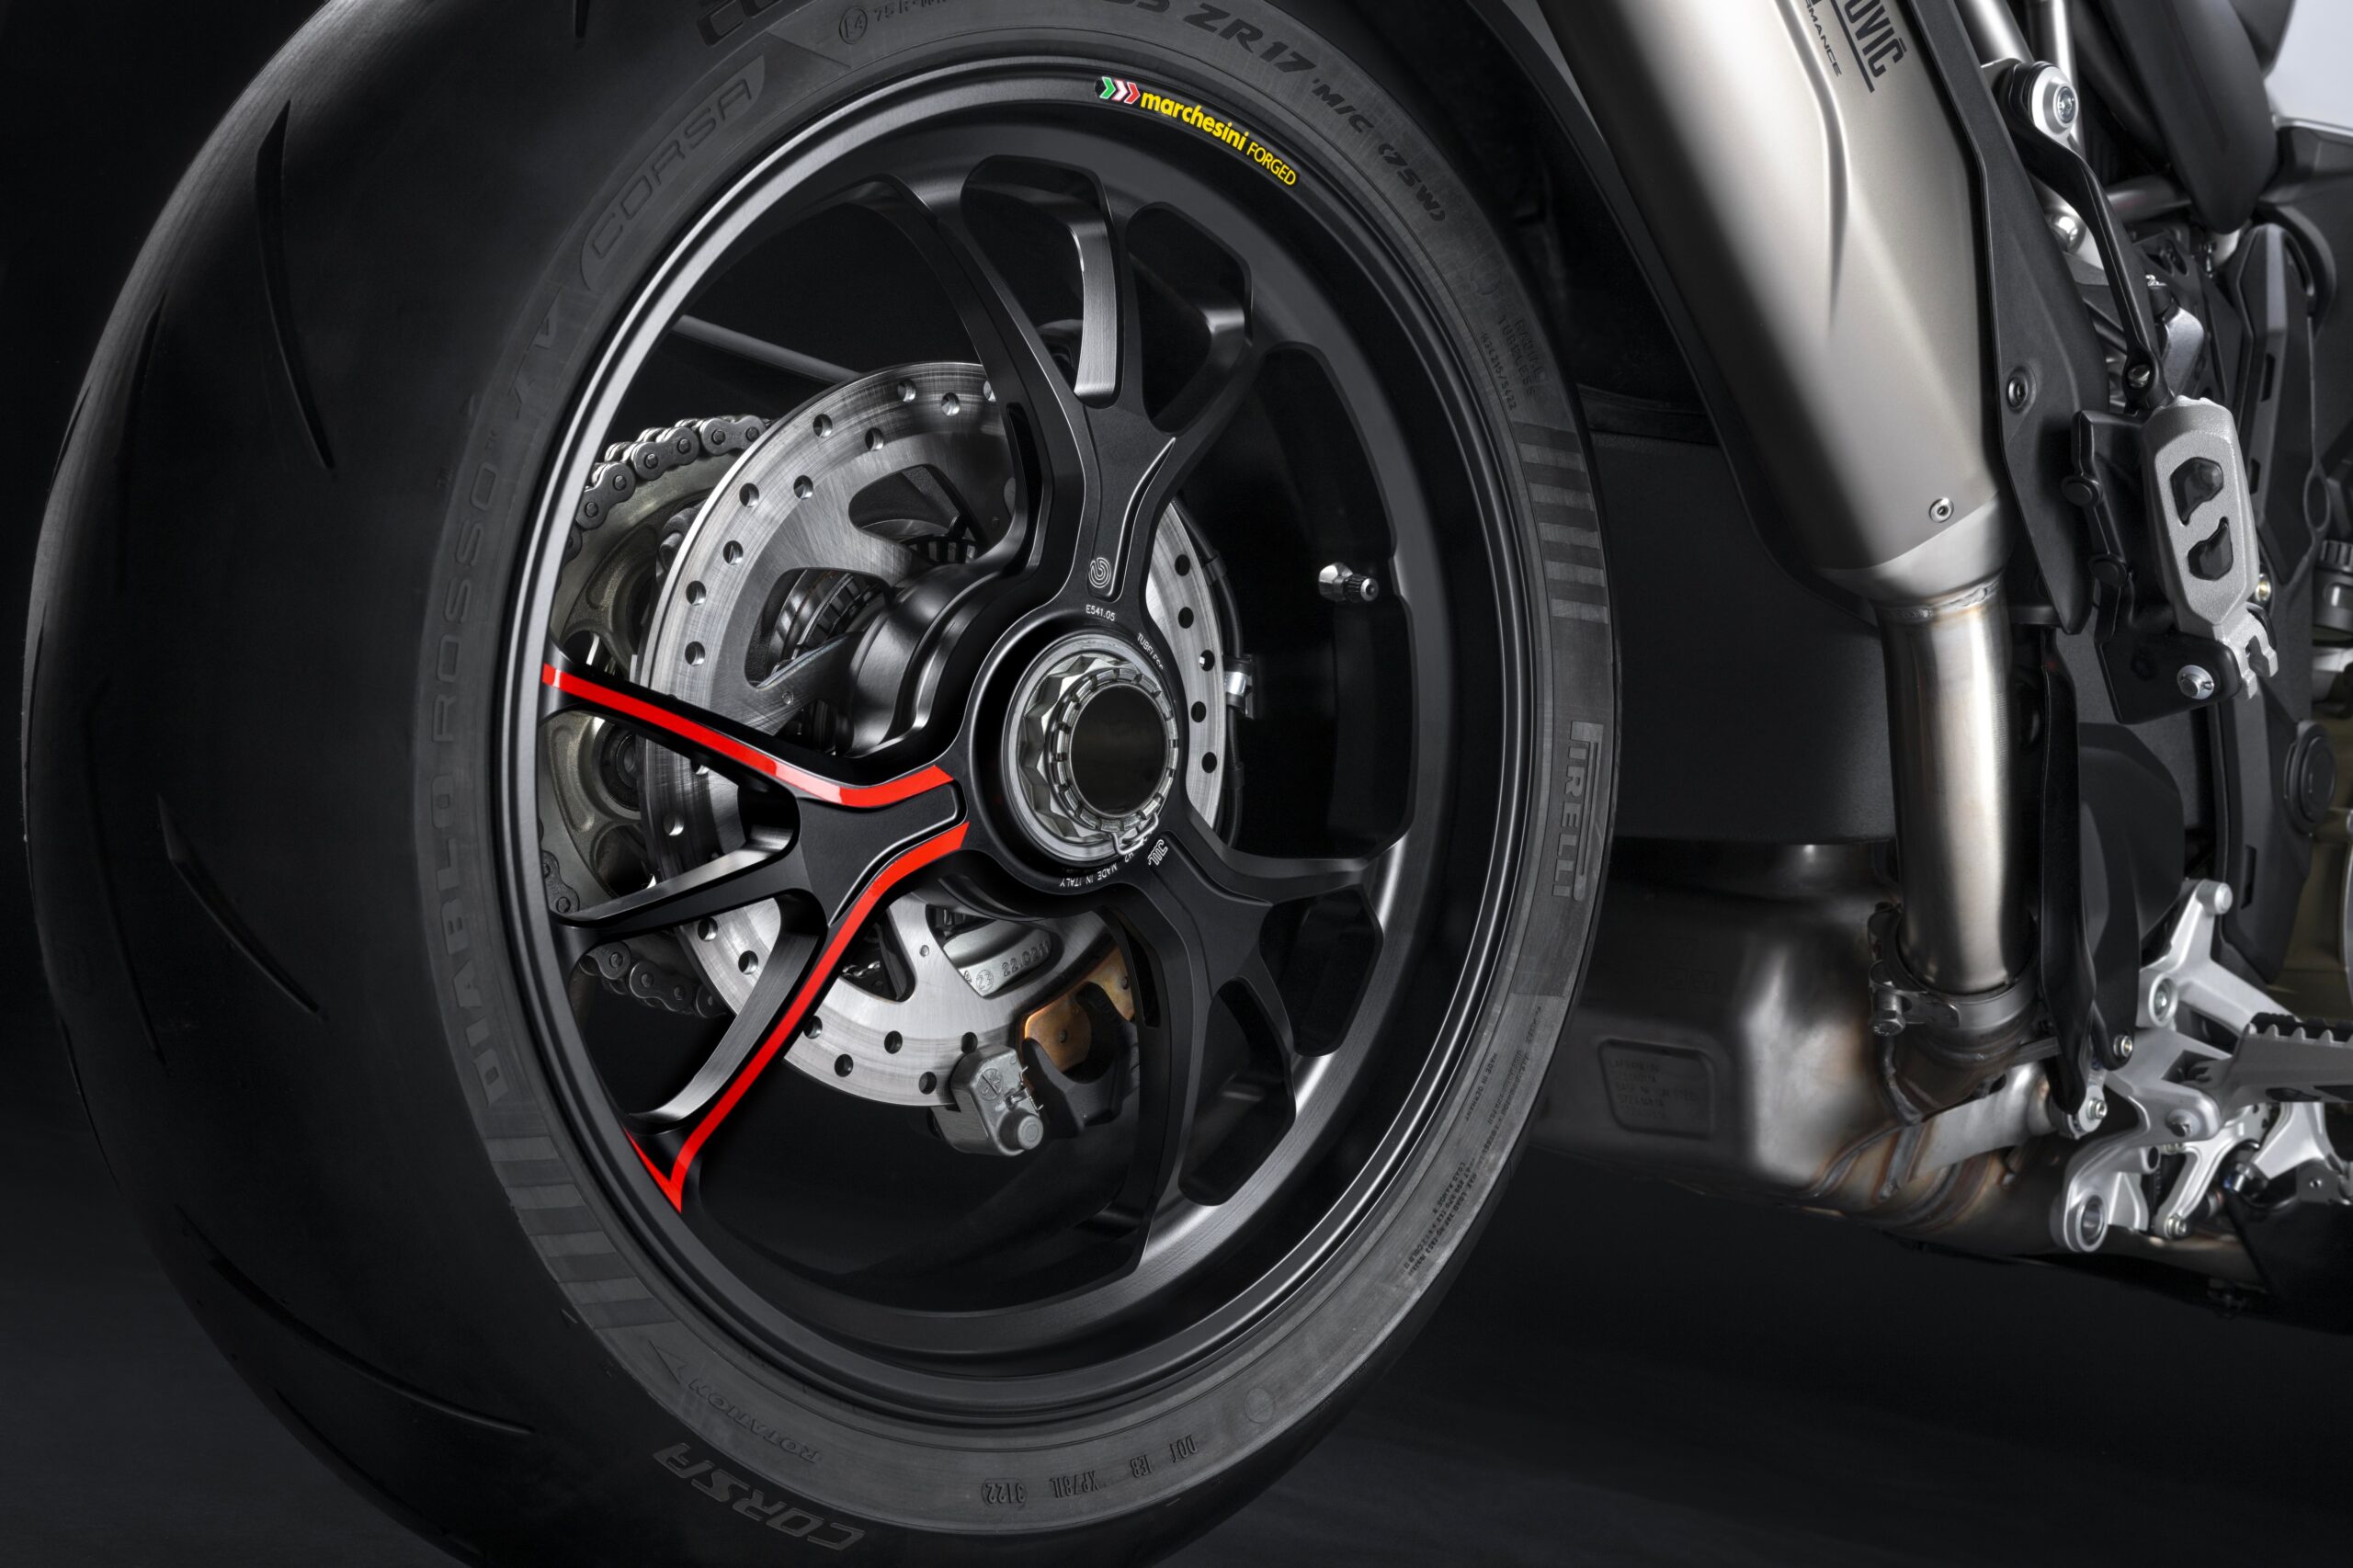 Ducati Multistrada V4 RS wheelie